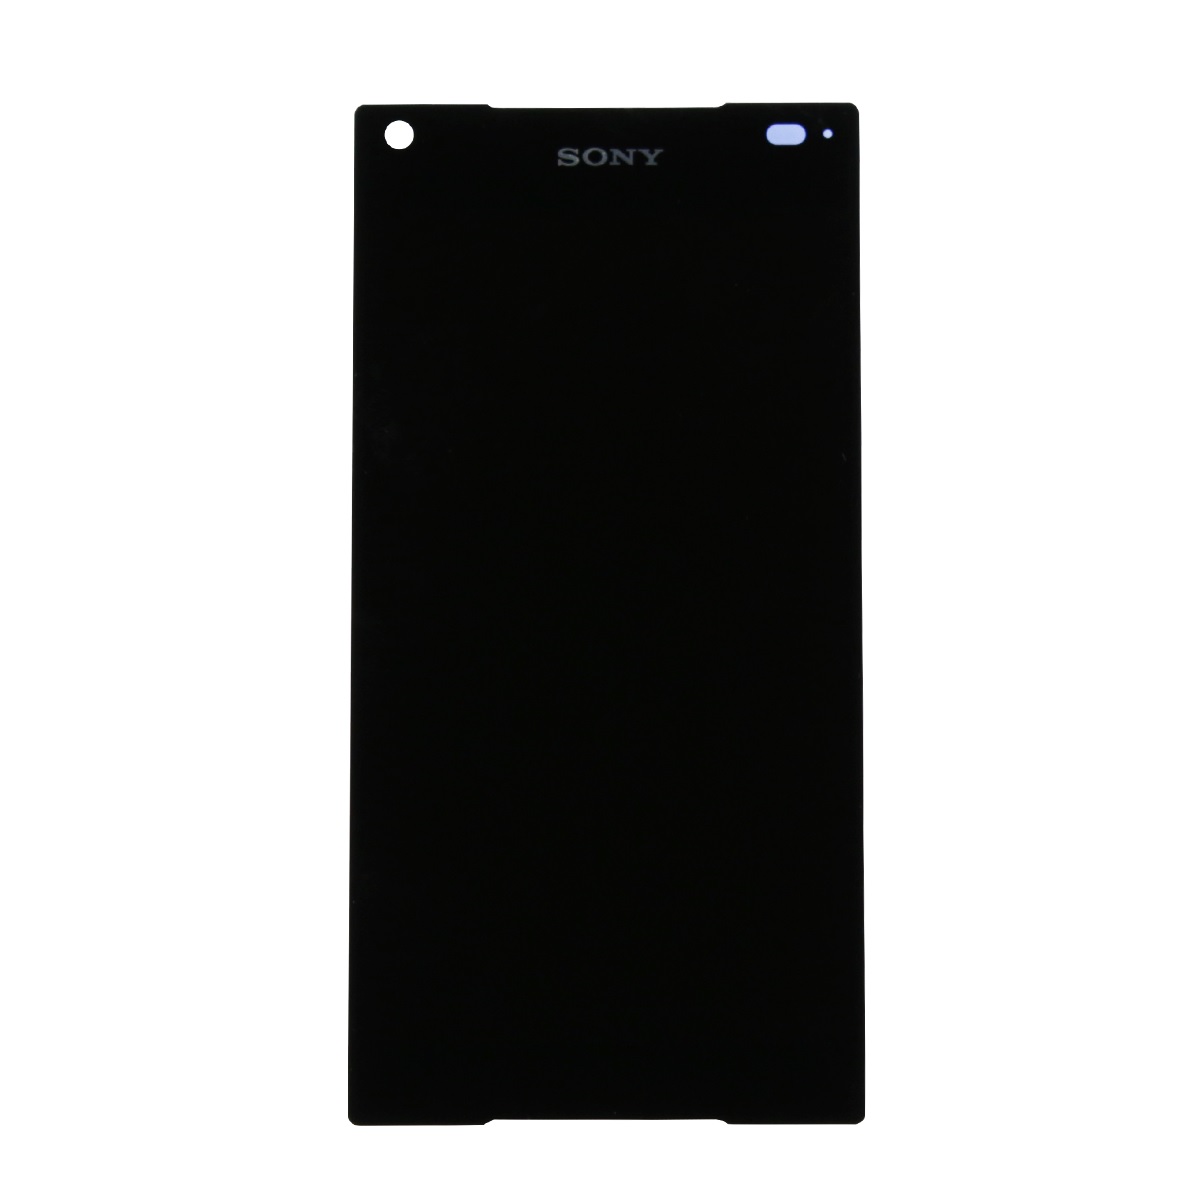 Черный экран сони. Дисплей для Sony Xperia z5. Sony z5 Compact дисплей. E5823 Sony дисплей. Модуль (дисплей + тачскрин) черный для Sony Xperia z1 Compact d5803.